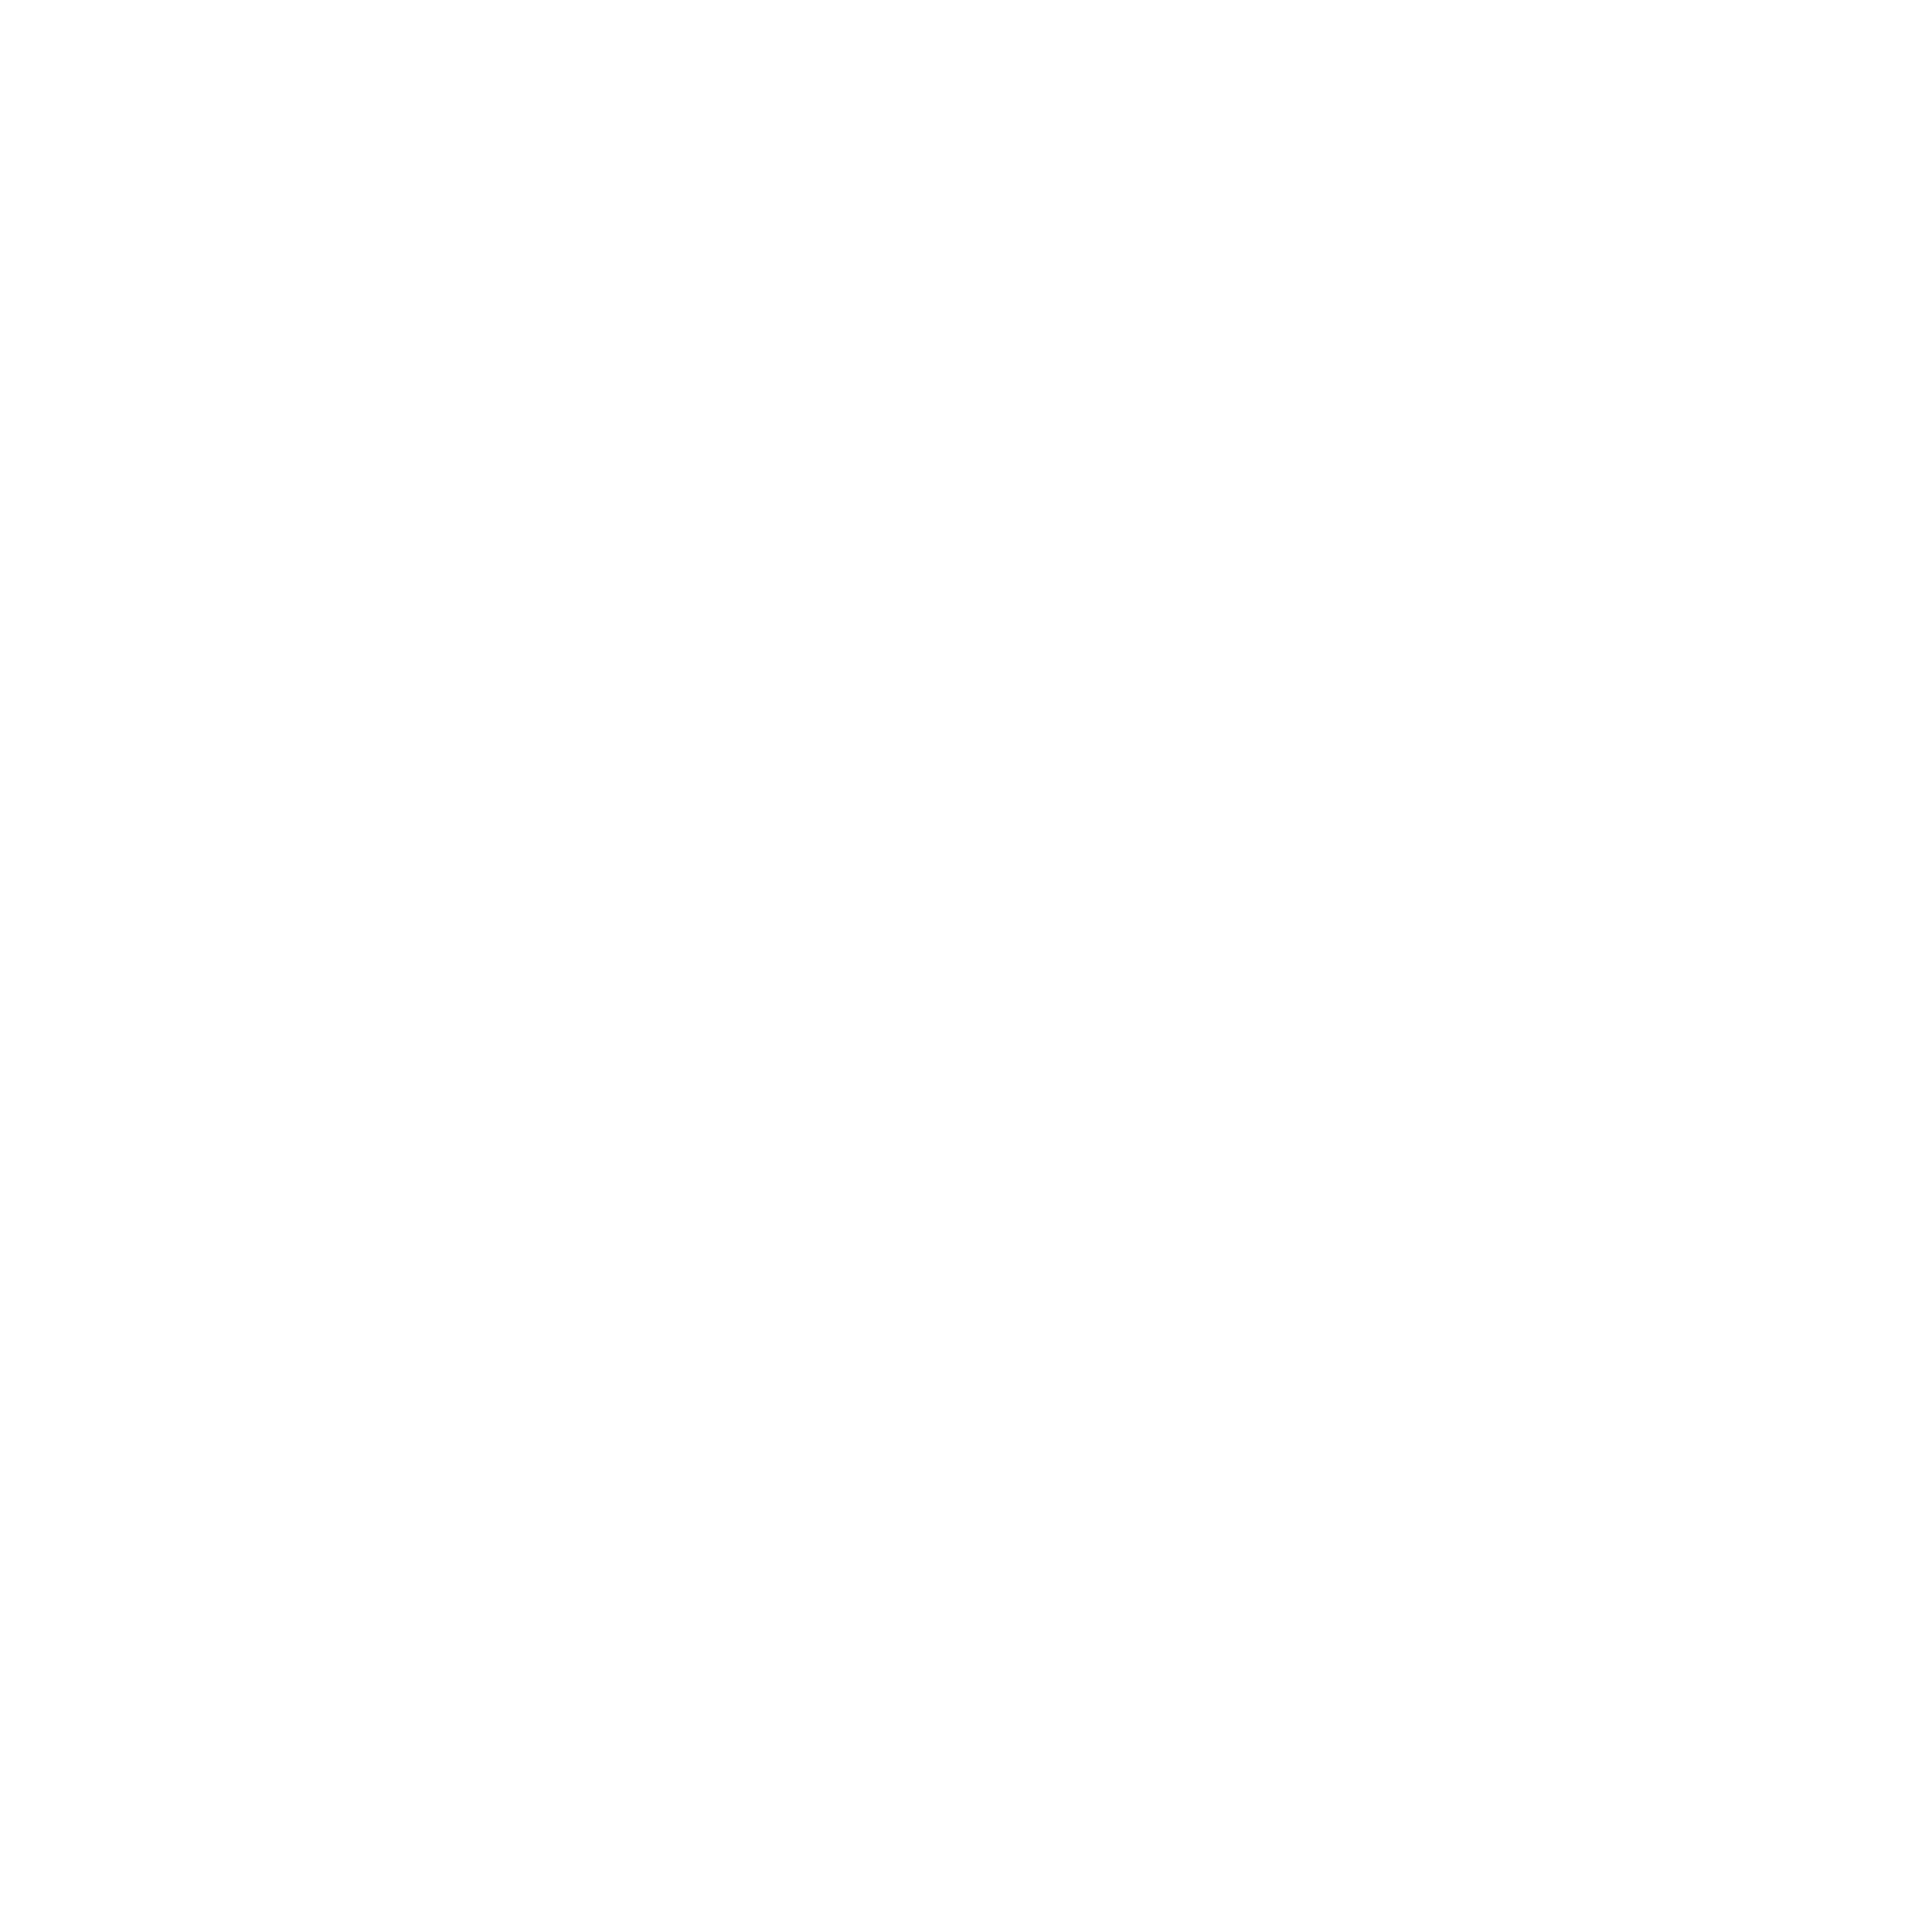 OCBC Logo - OCBC Bank Logo PNG Transparent & SVG Vector - Freebie Supply